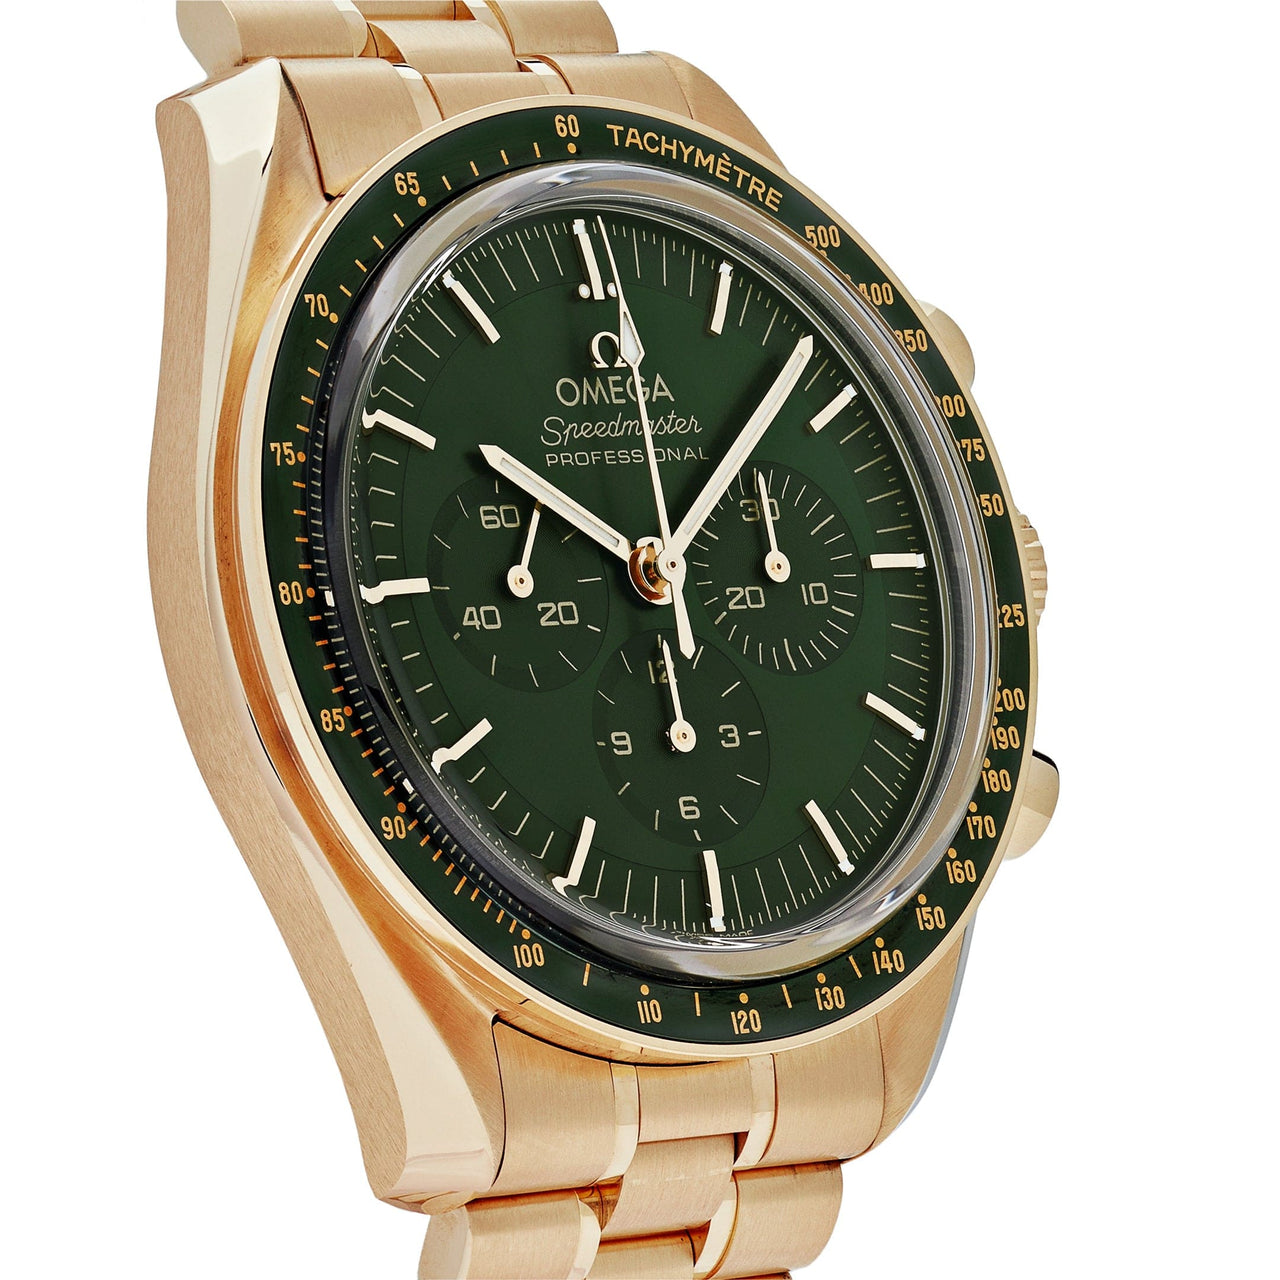 Omega Speedmaster Moonwatch Professional Co‑Axial Master Chronometer Chronograph 310.60.42.50.10.001 Wrist Aficionado